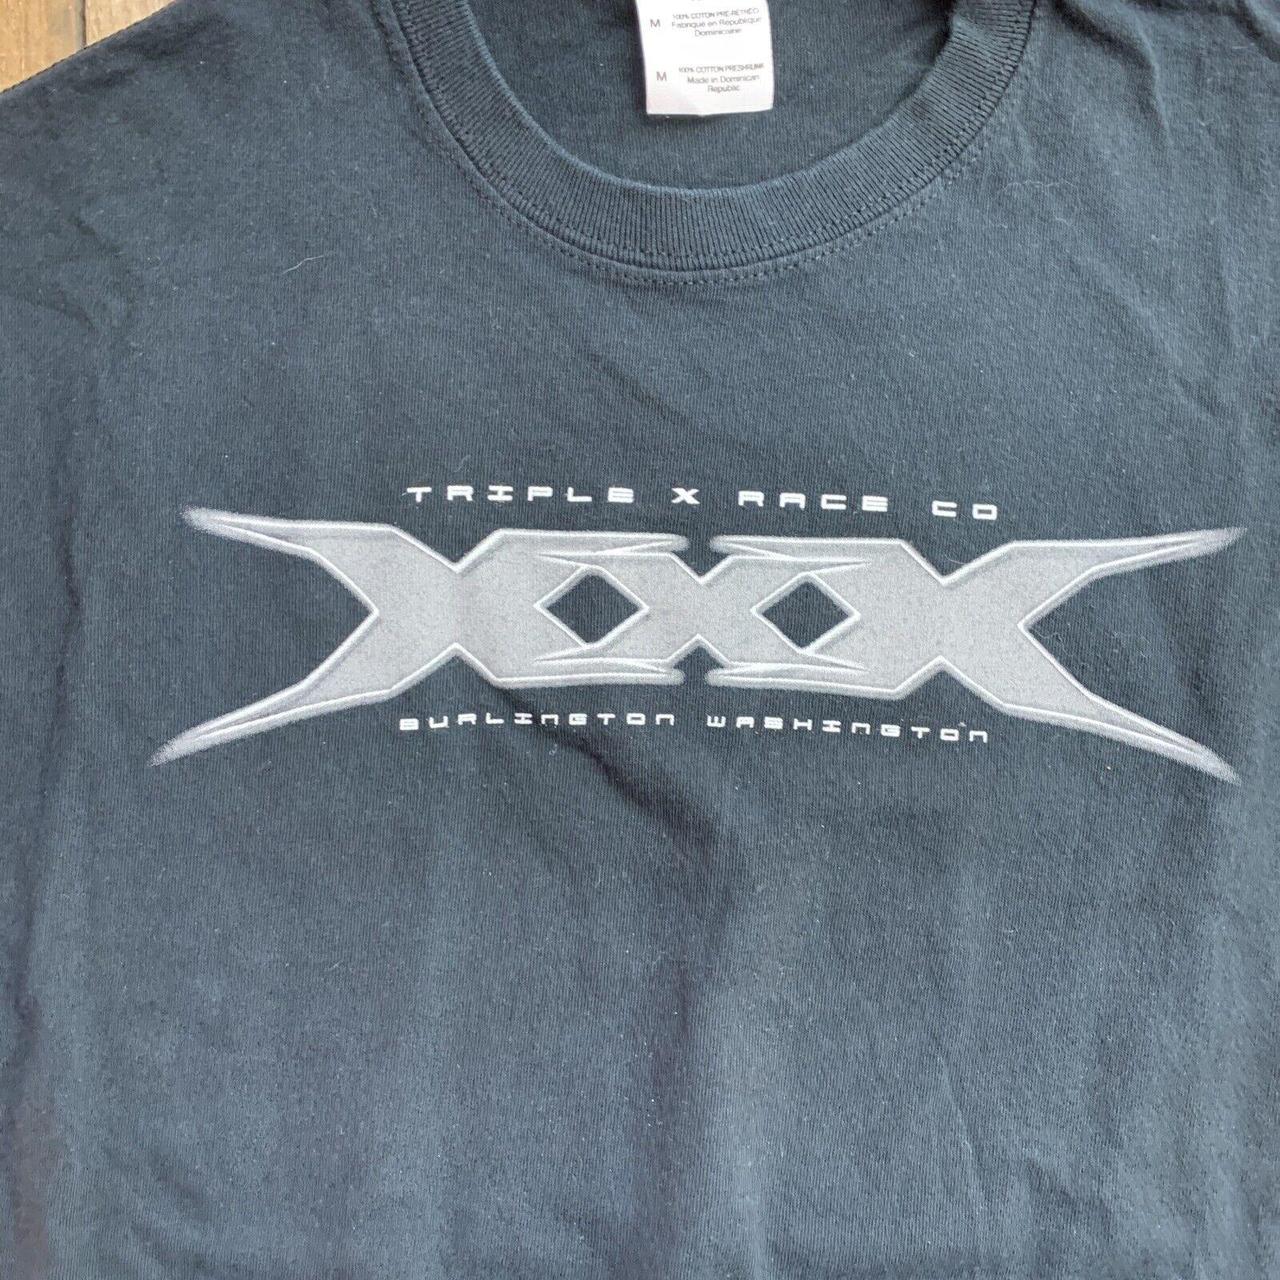 Triple X Race Co Burlington Washington Mens T-Shirt... - Depop